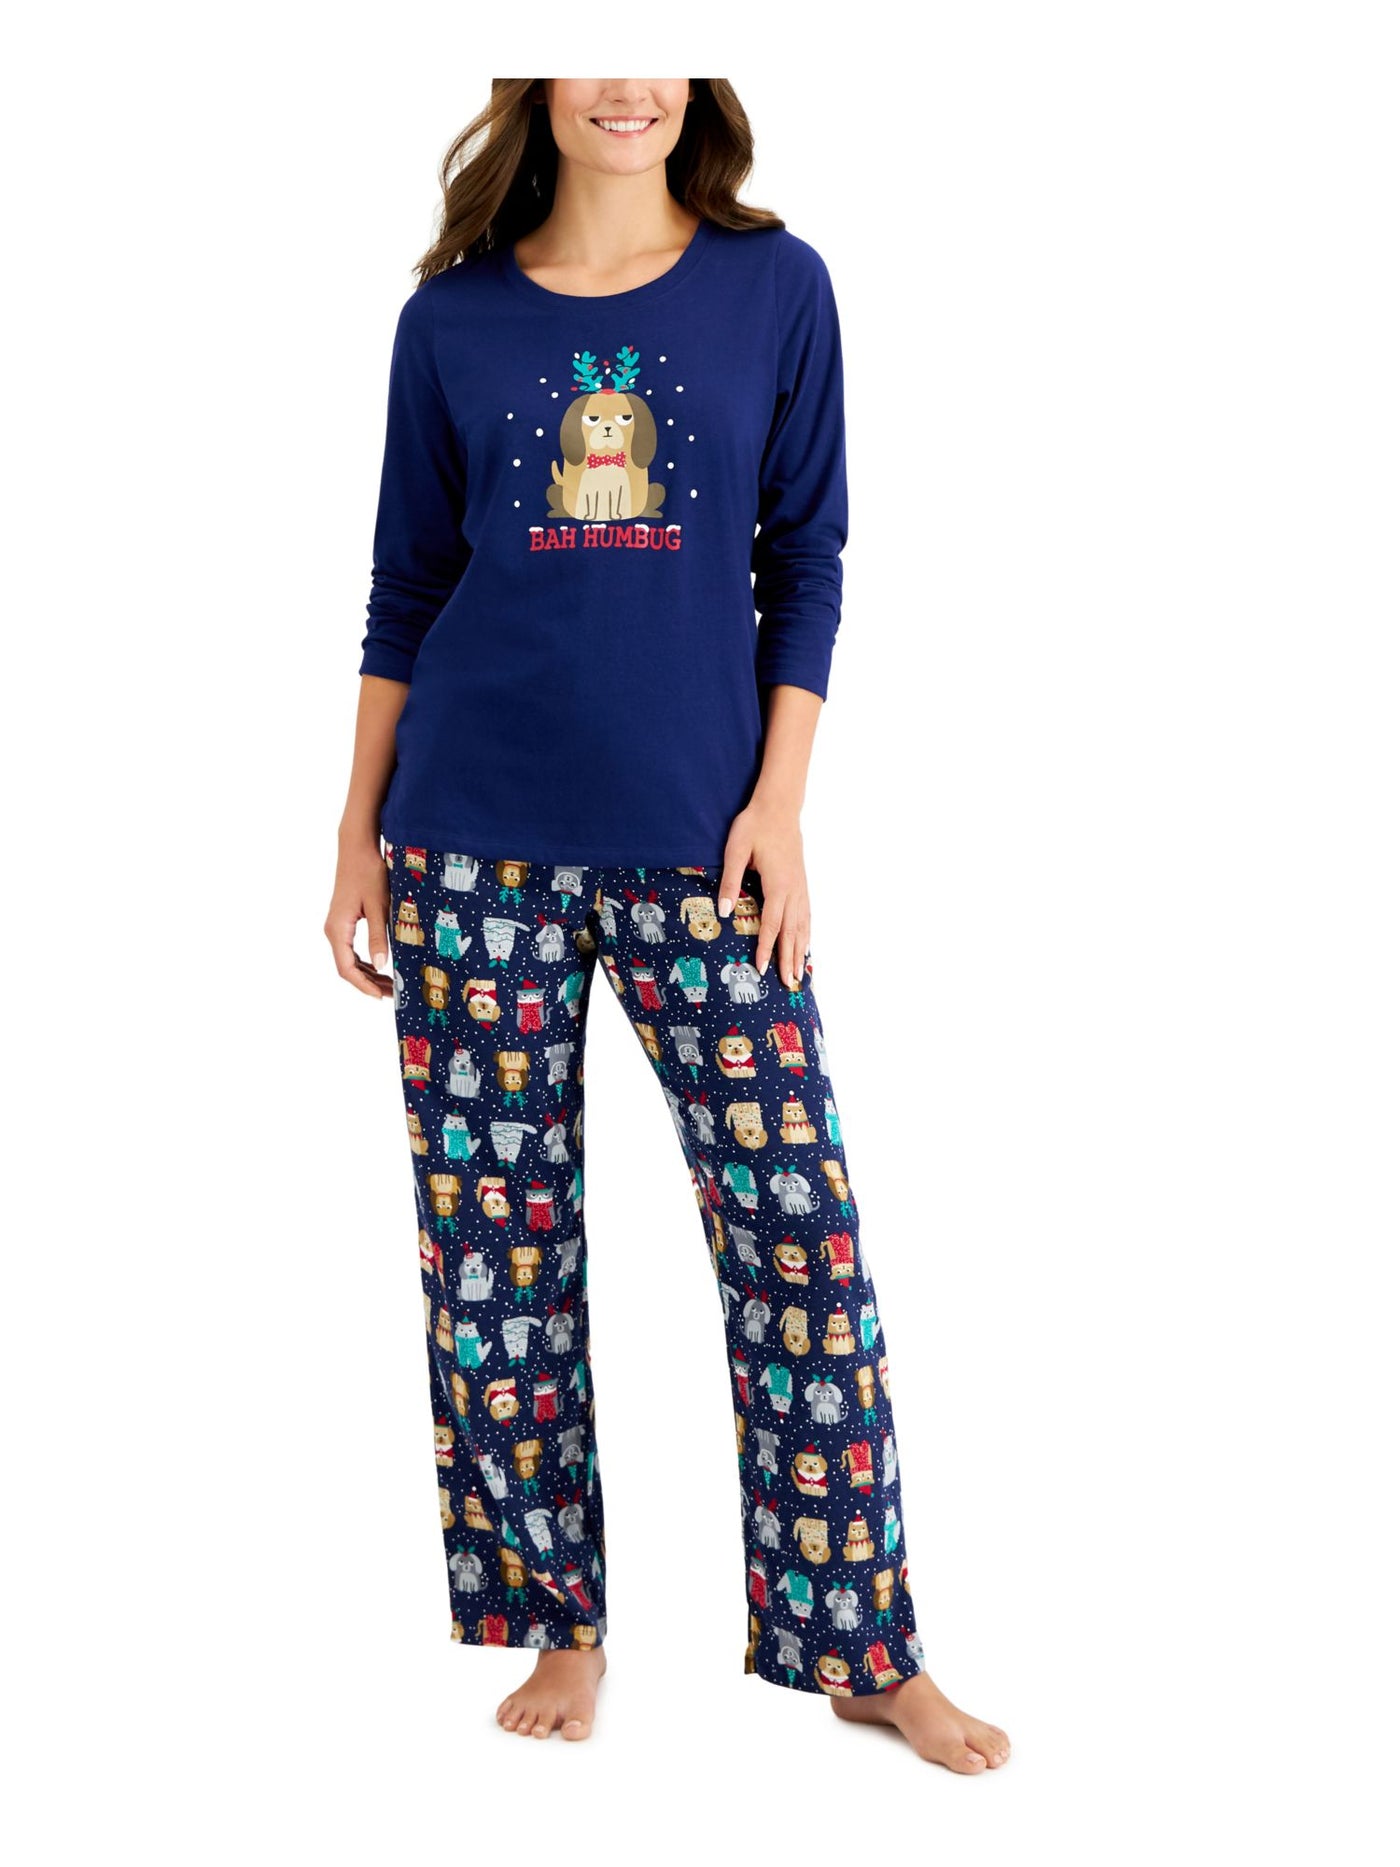 FAMILY PJs Womens Bah Humbug Blue Graphic Lightweight Long Sleeve T-Shirt Top Straight leg Pants Pajamas XL